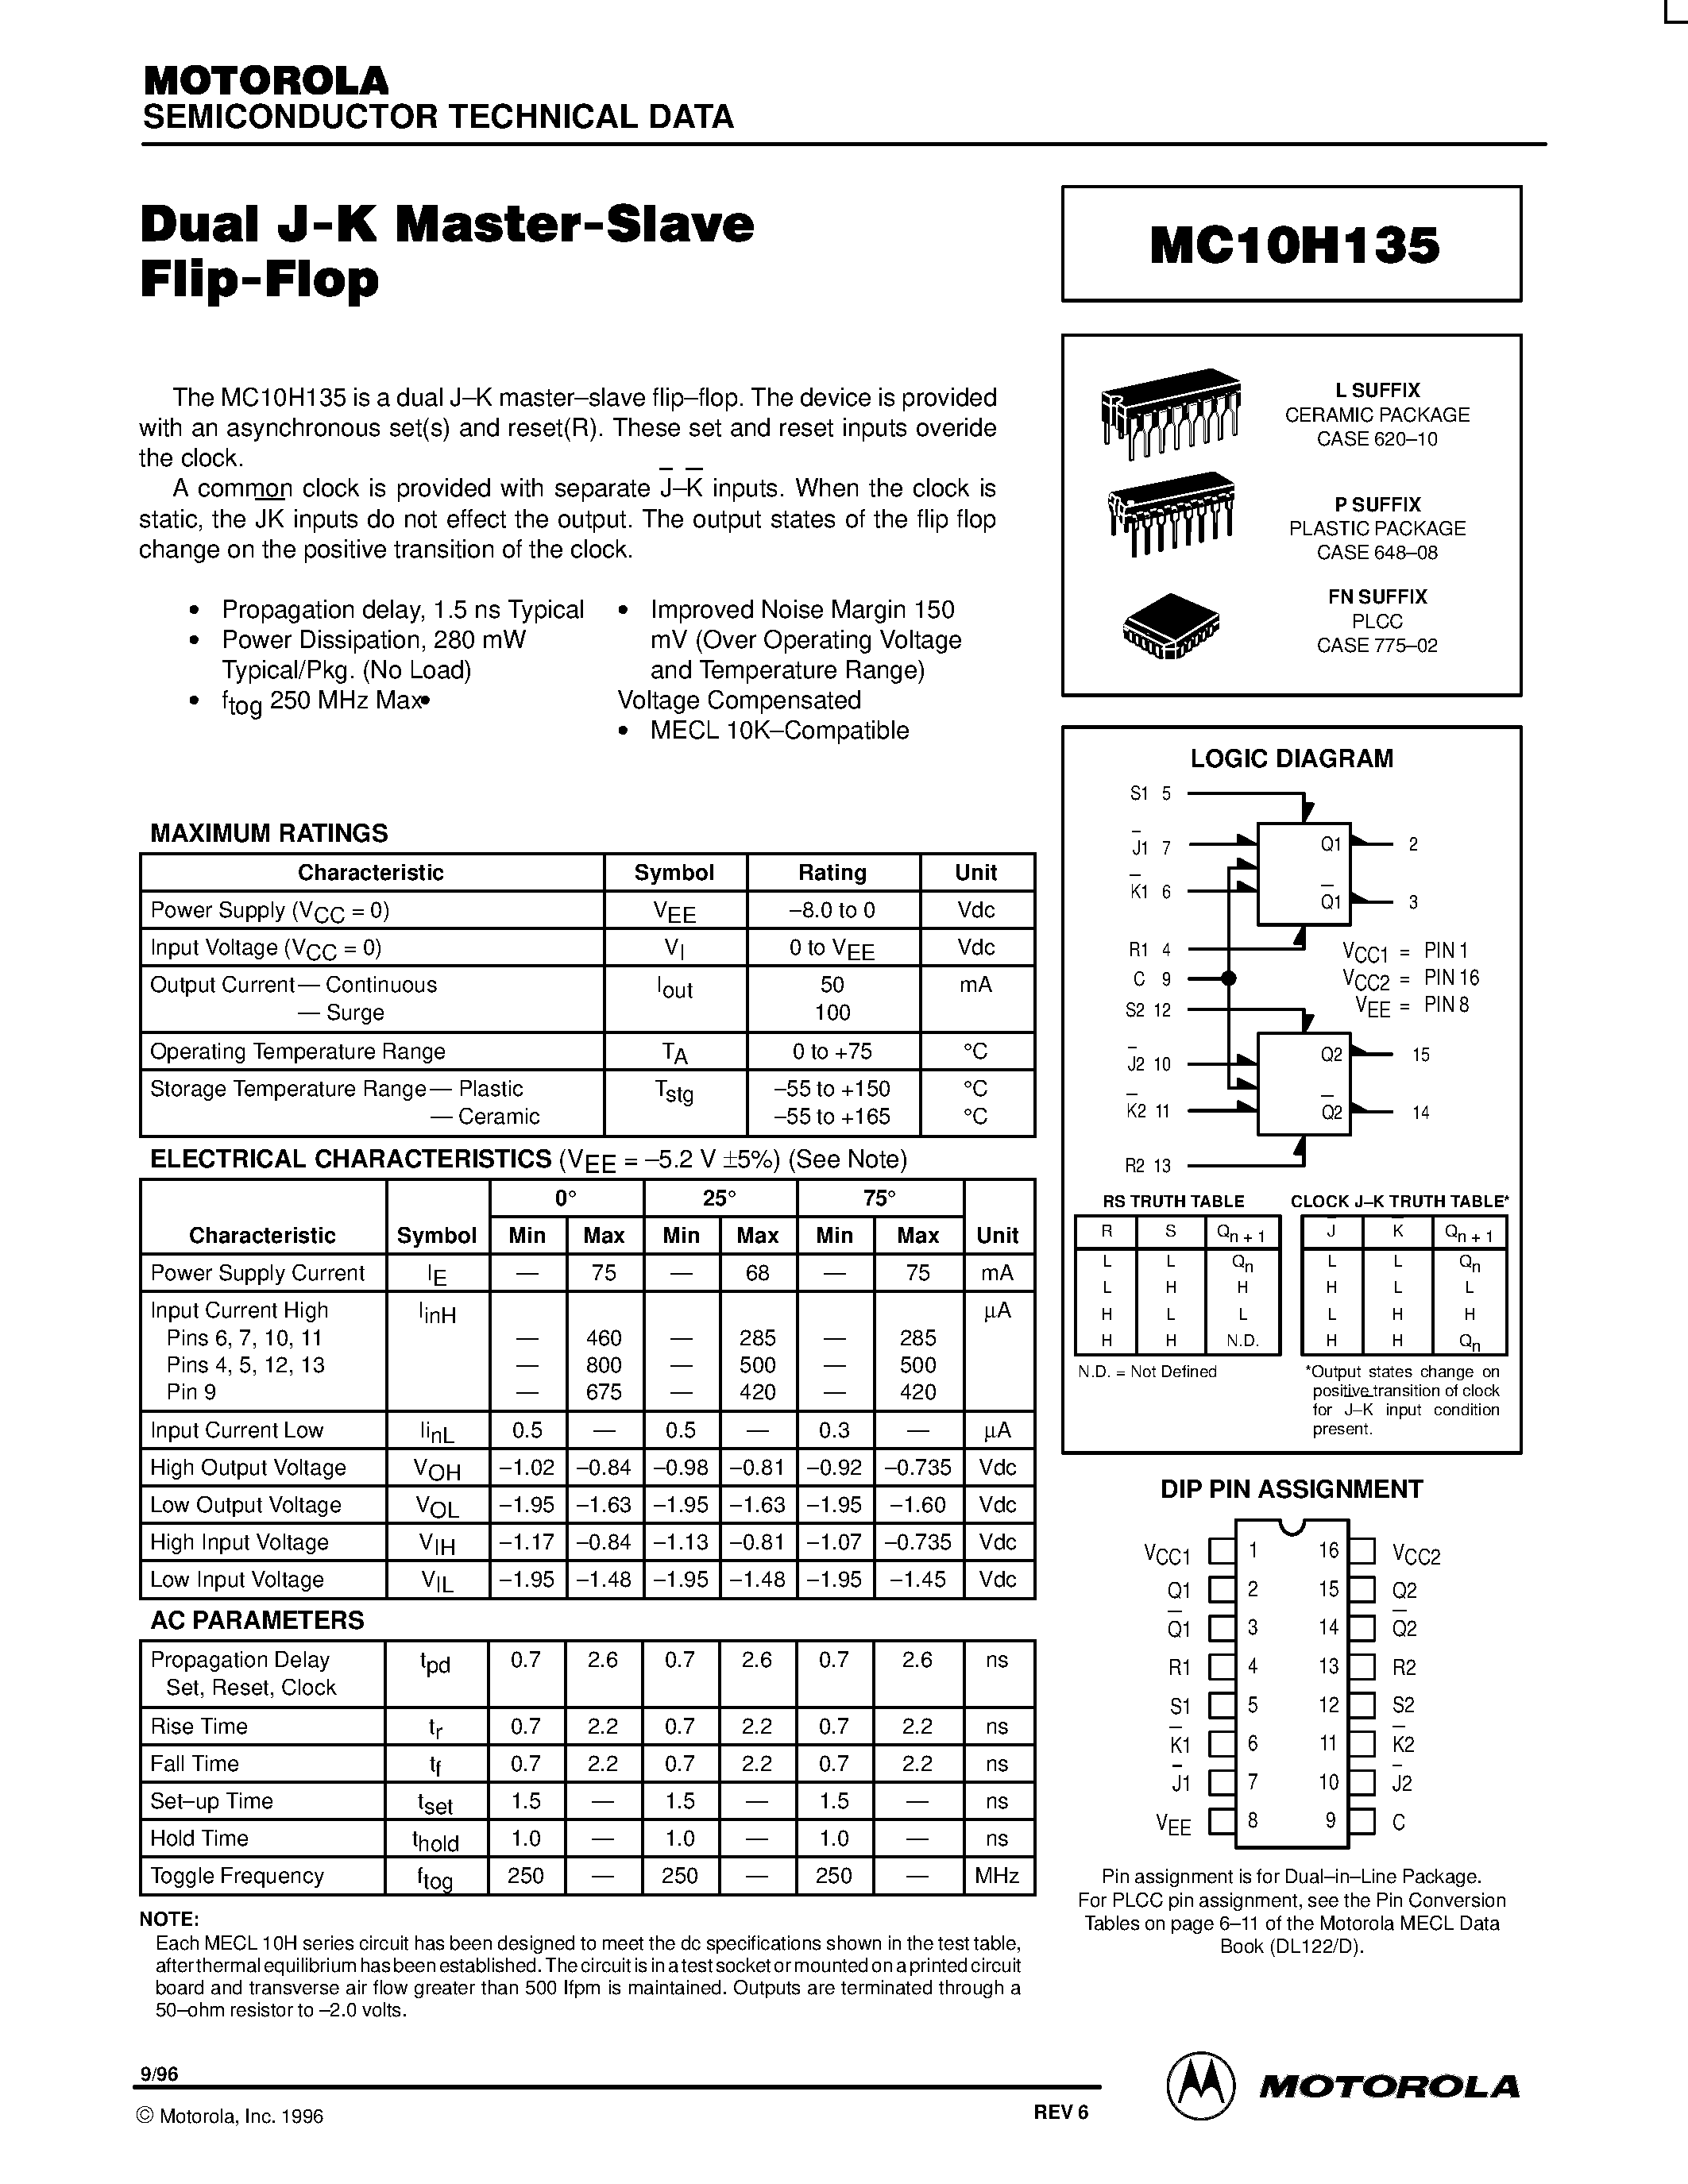 Datasheet MC10H135P - Dual J-K Master-Slave Flip-Flop page 1